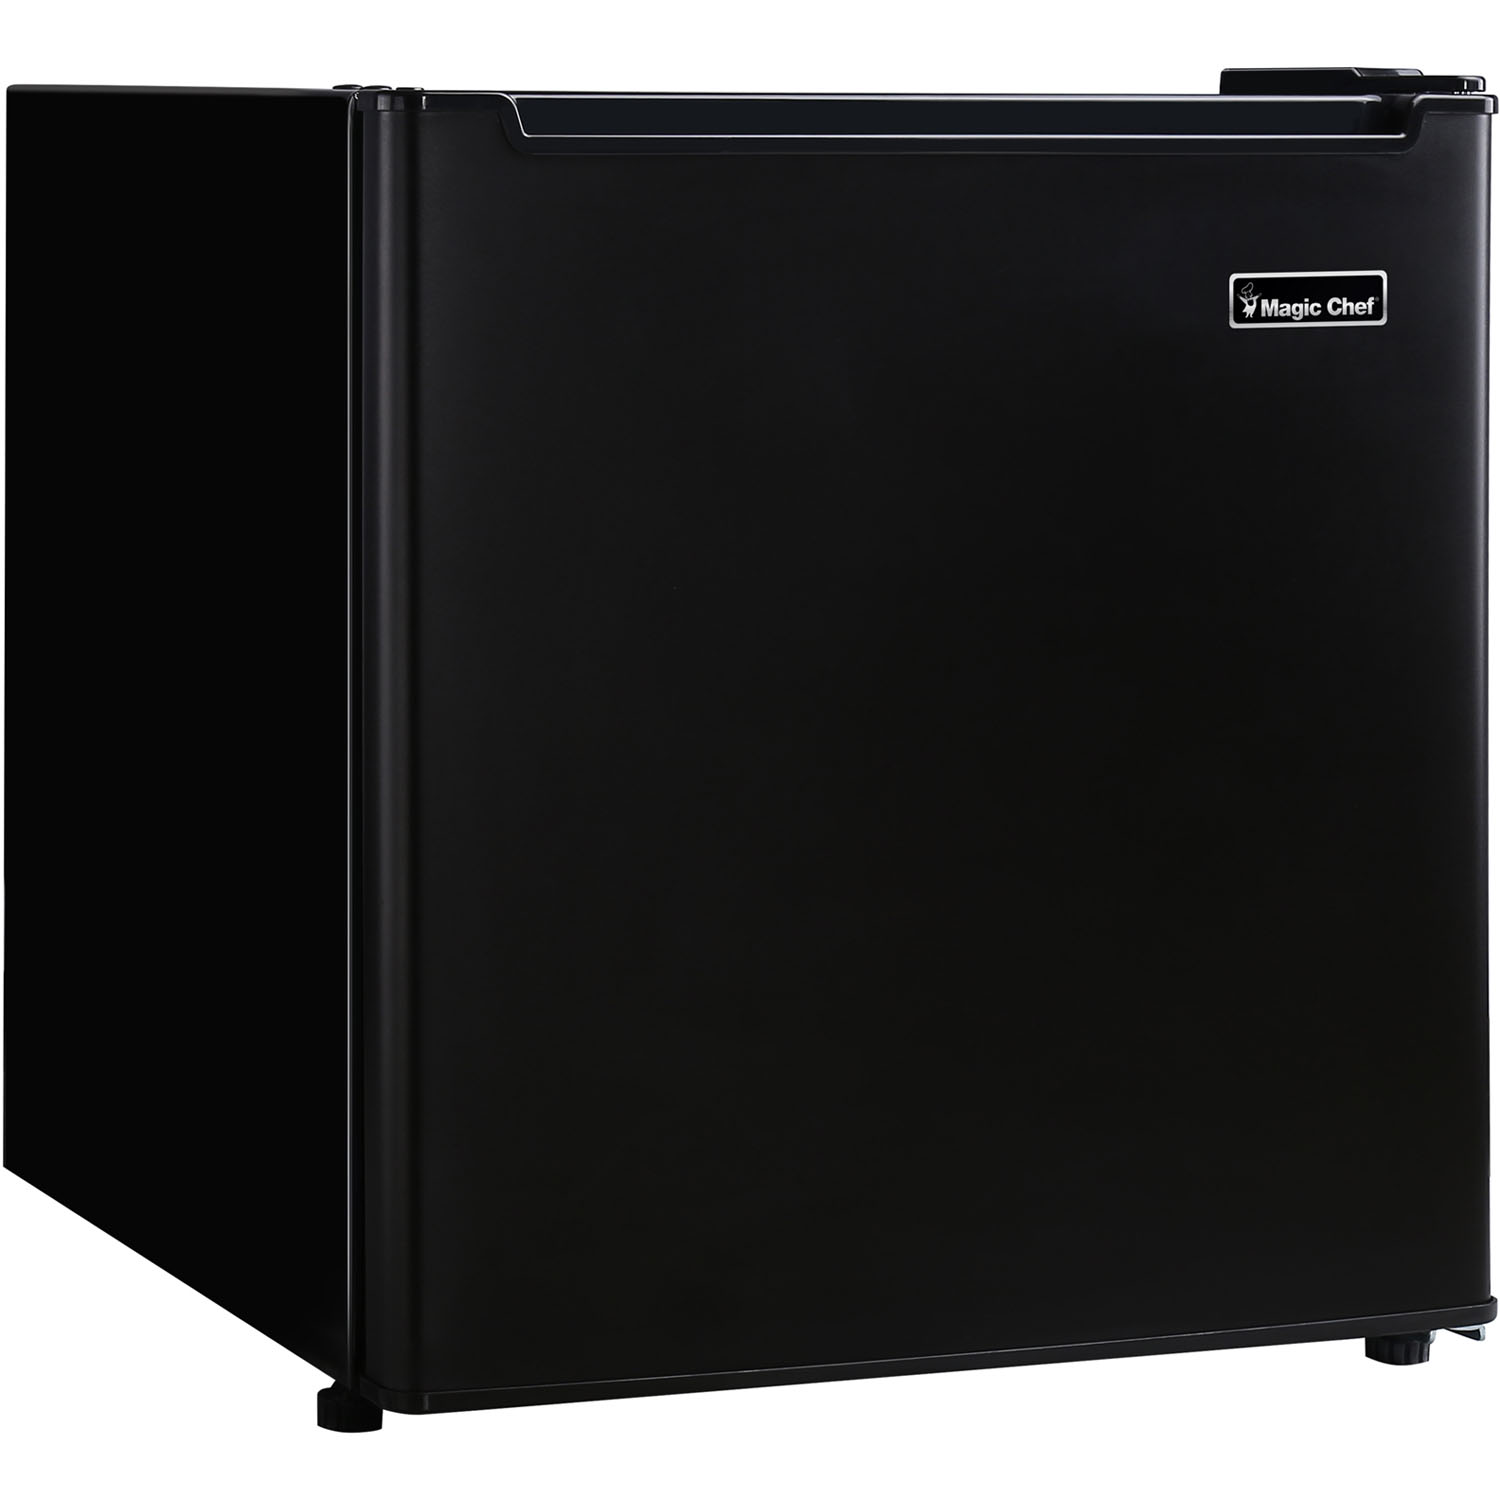 Magic Chef Energy Star 1.7 Cu. Ft. Mini All-Refrigerator in Black - image 3 of 4